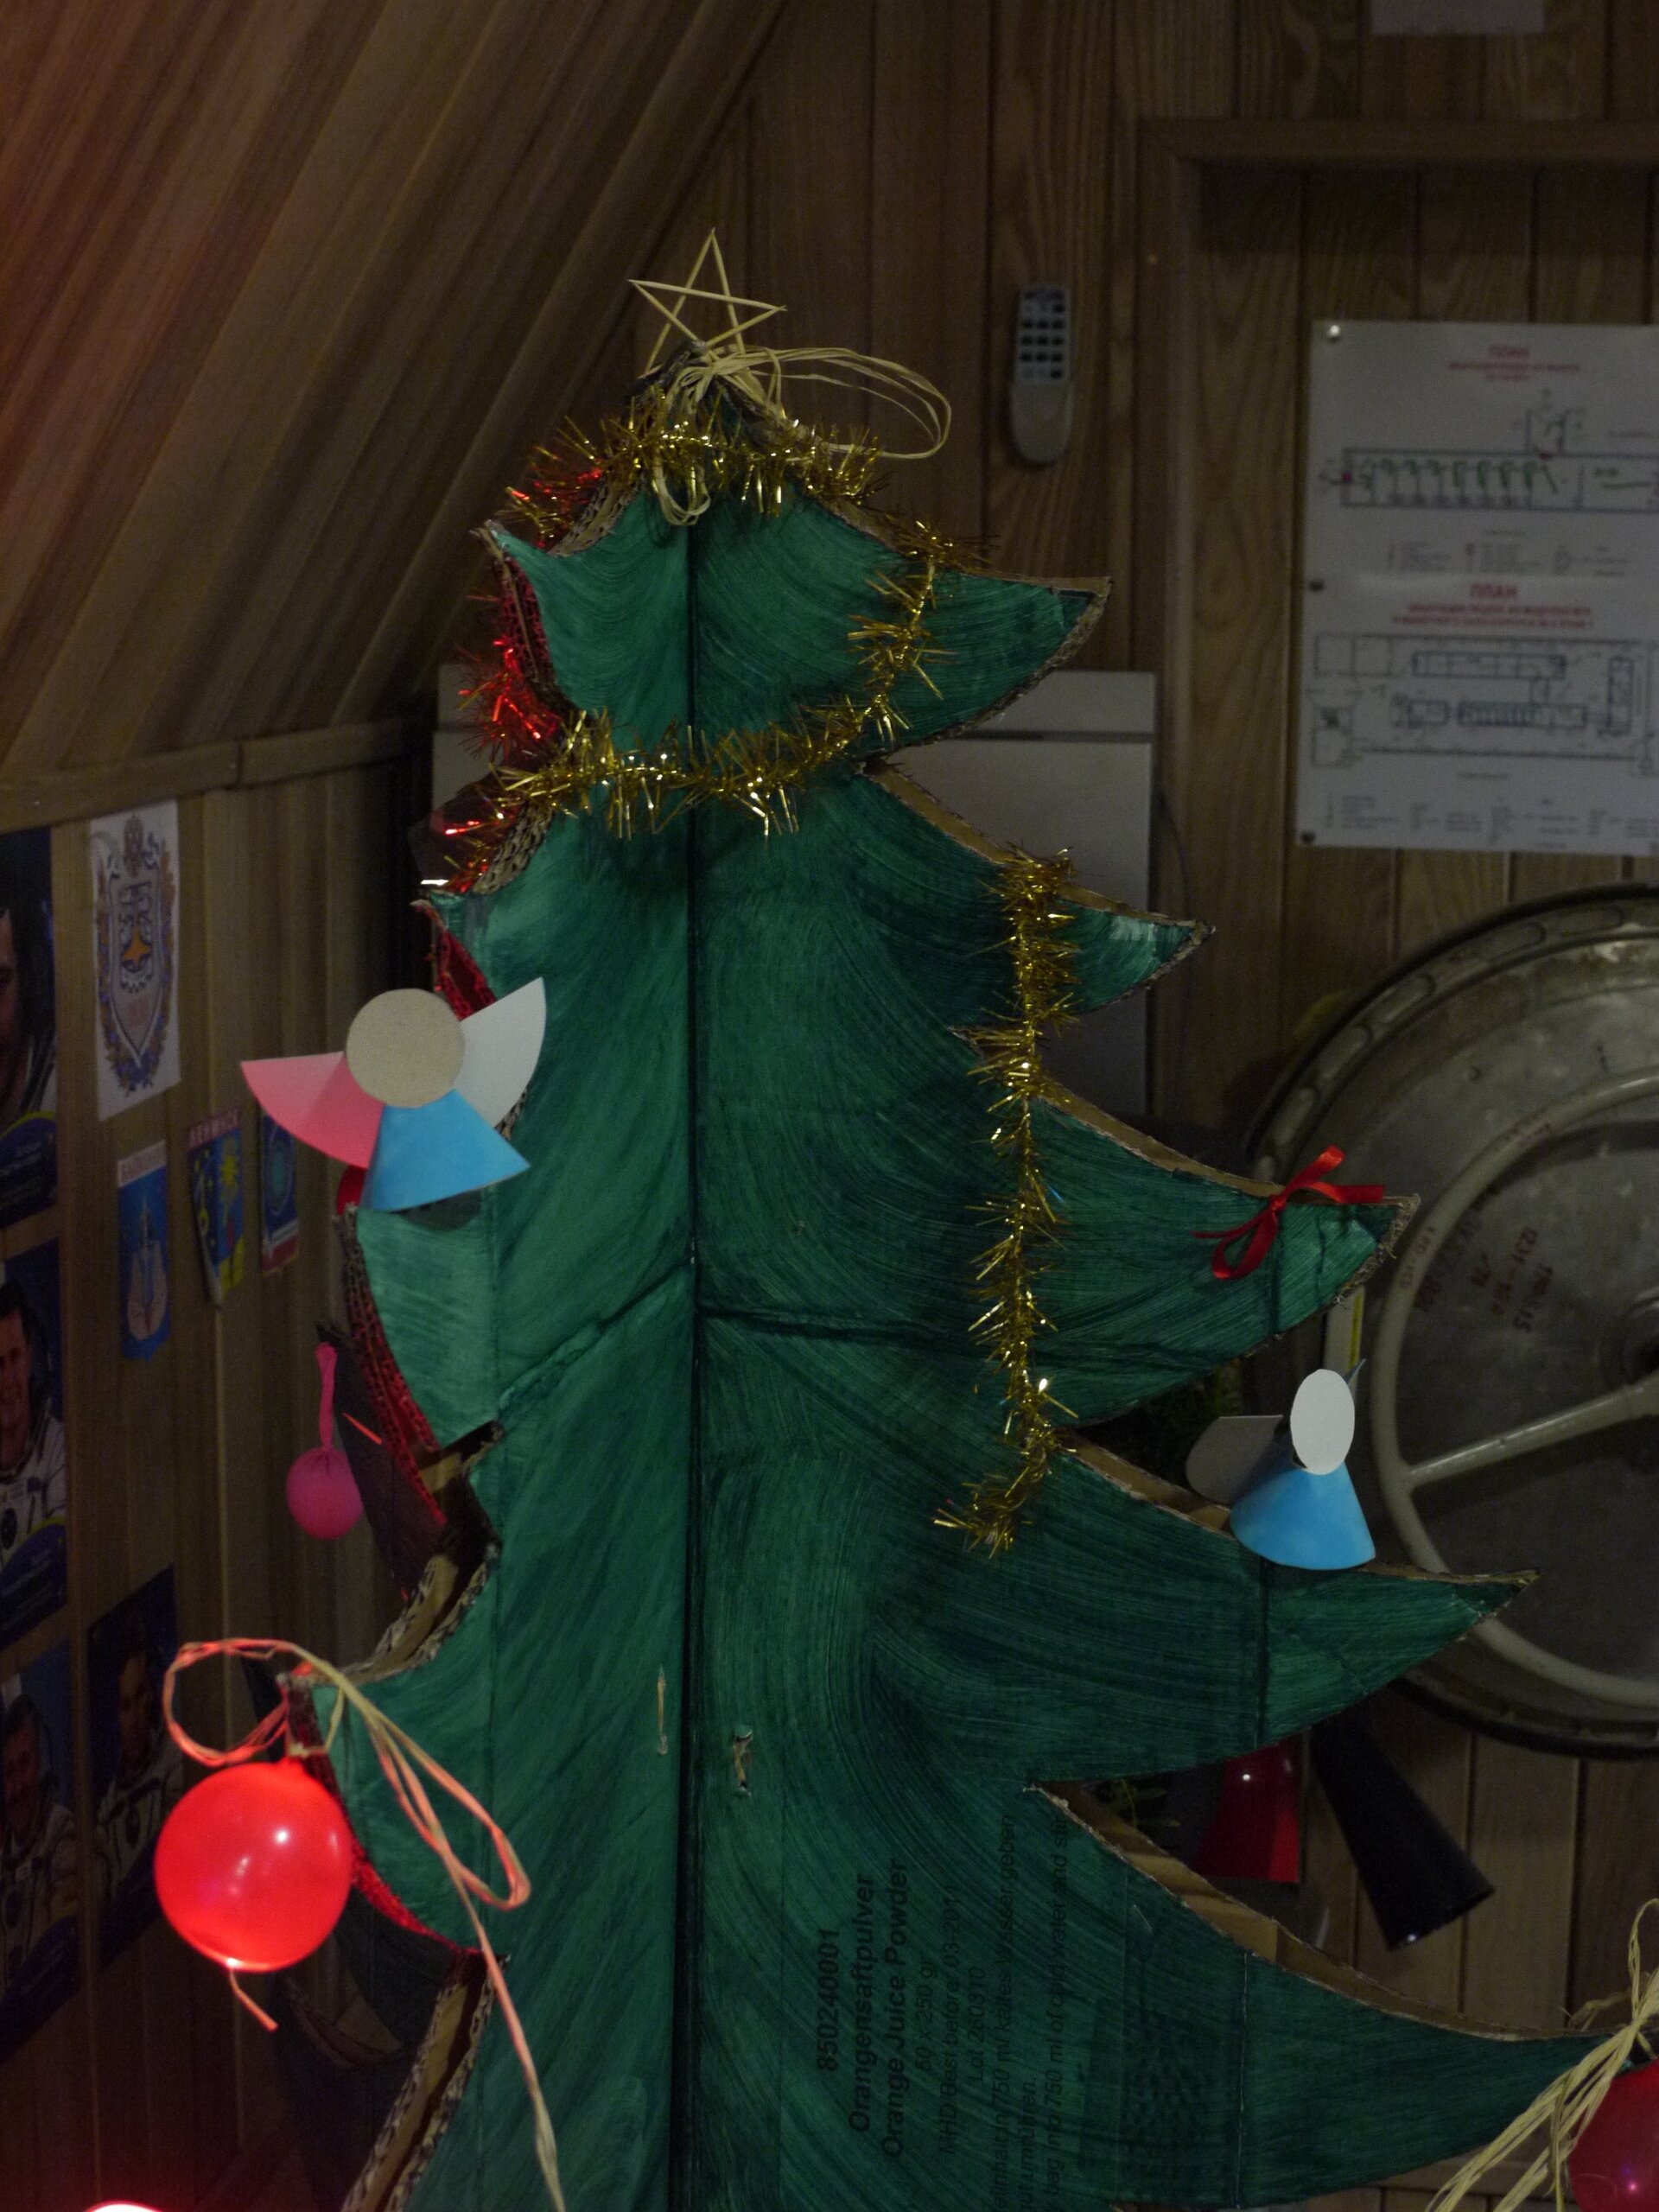 Christmas tree at the Mars500 facility